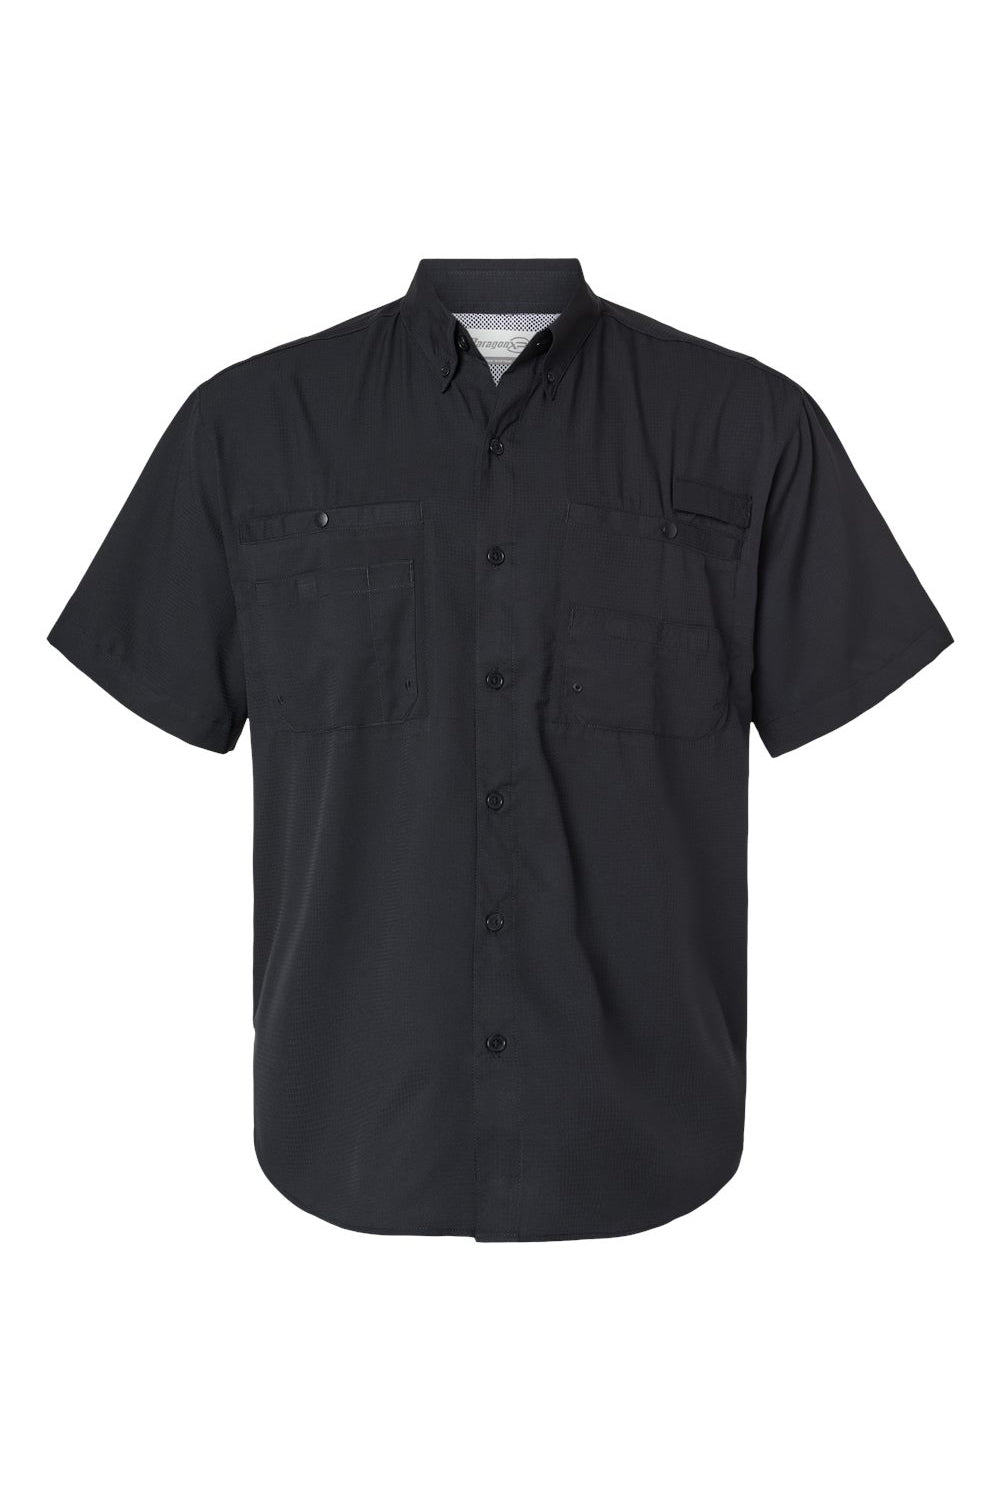 Paragon 700 Mens Hatteras Performance Short Sleeve Button Down Shirt Black Flat Front